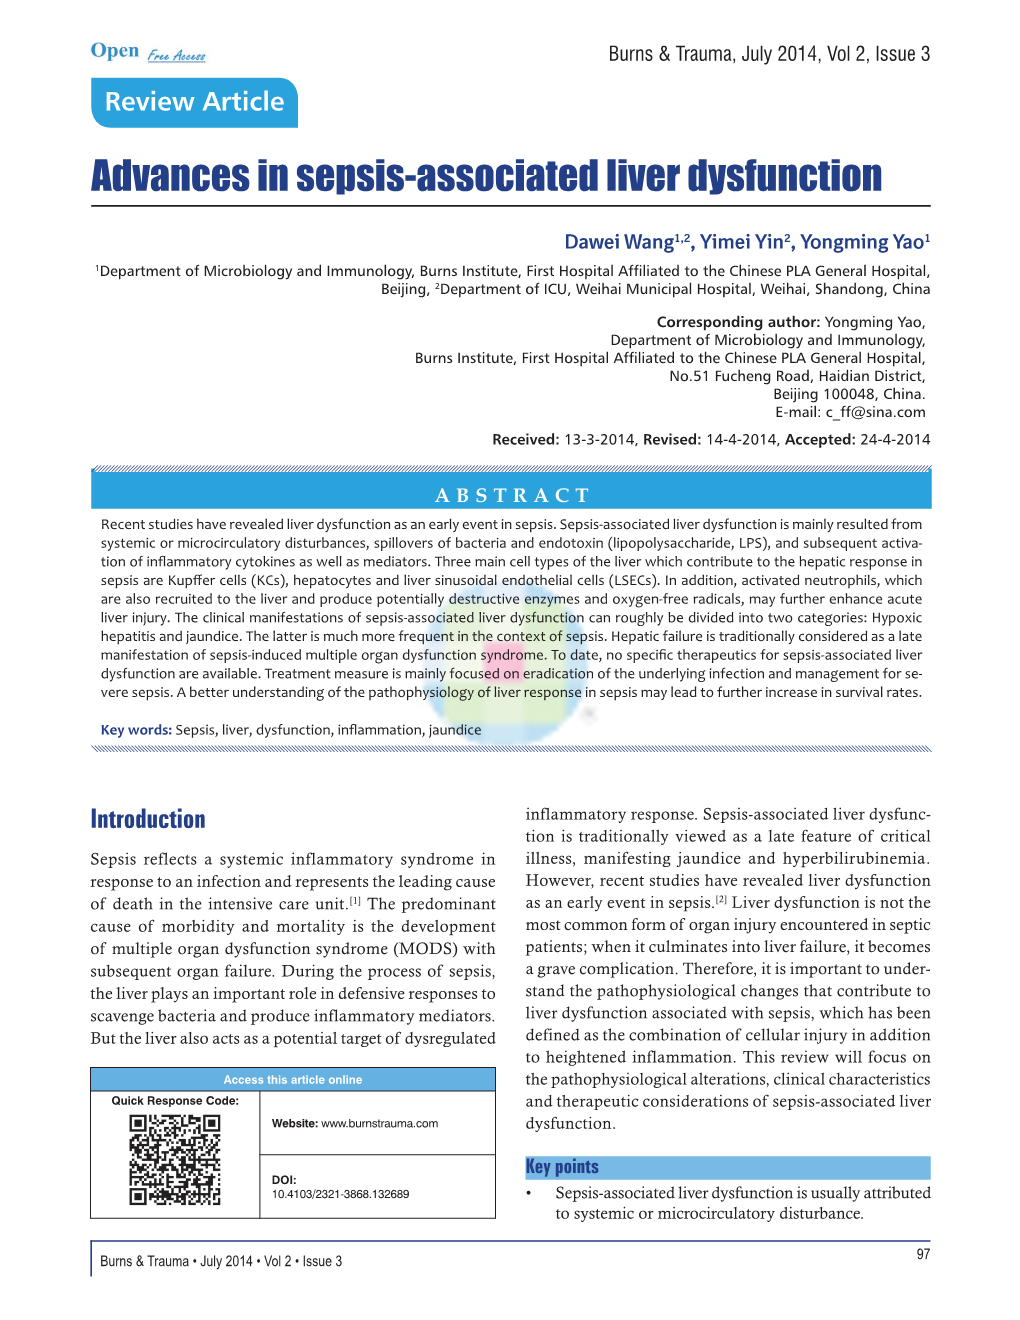 Advances in Sepsis-Associated Liver Dysfunction